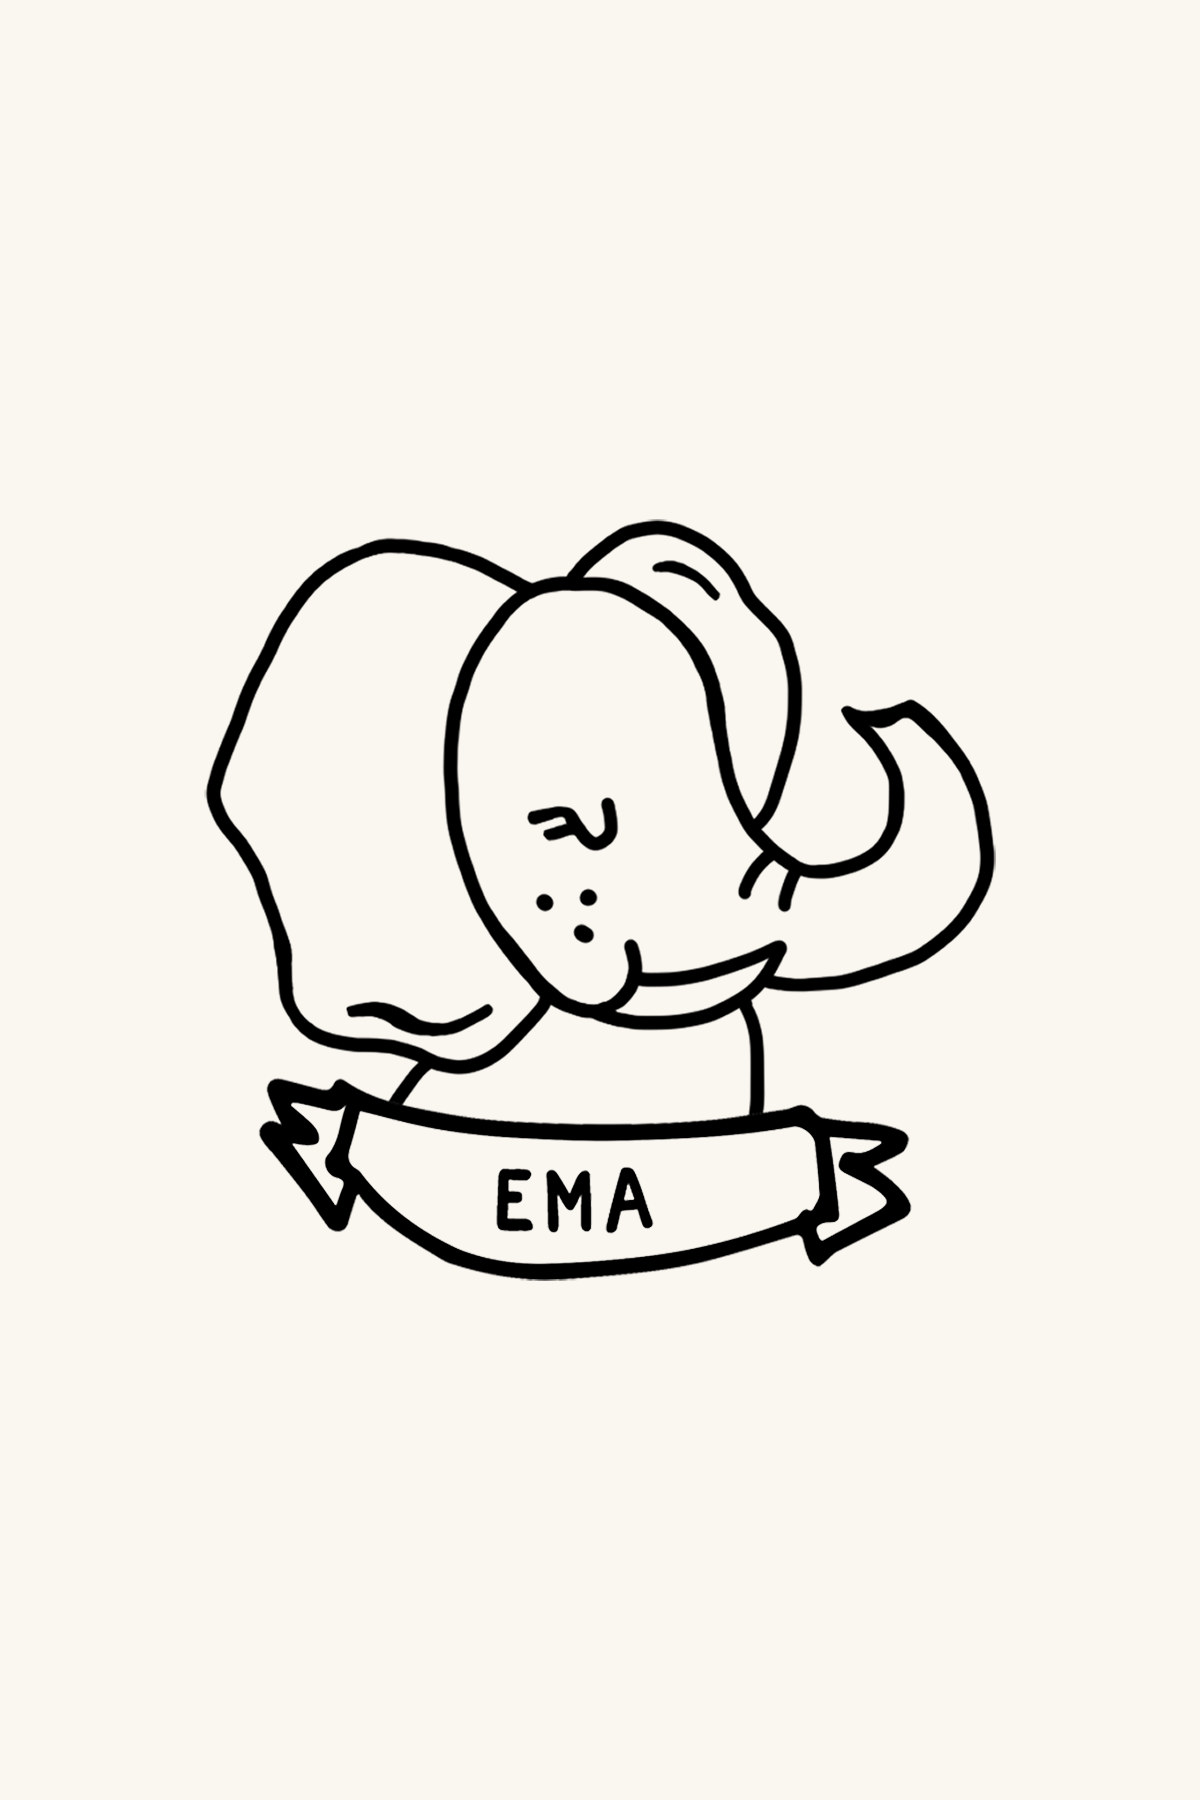 Dibujo de un elefante